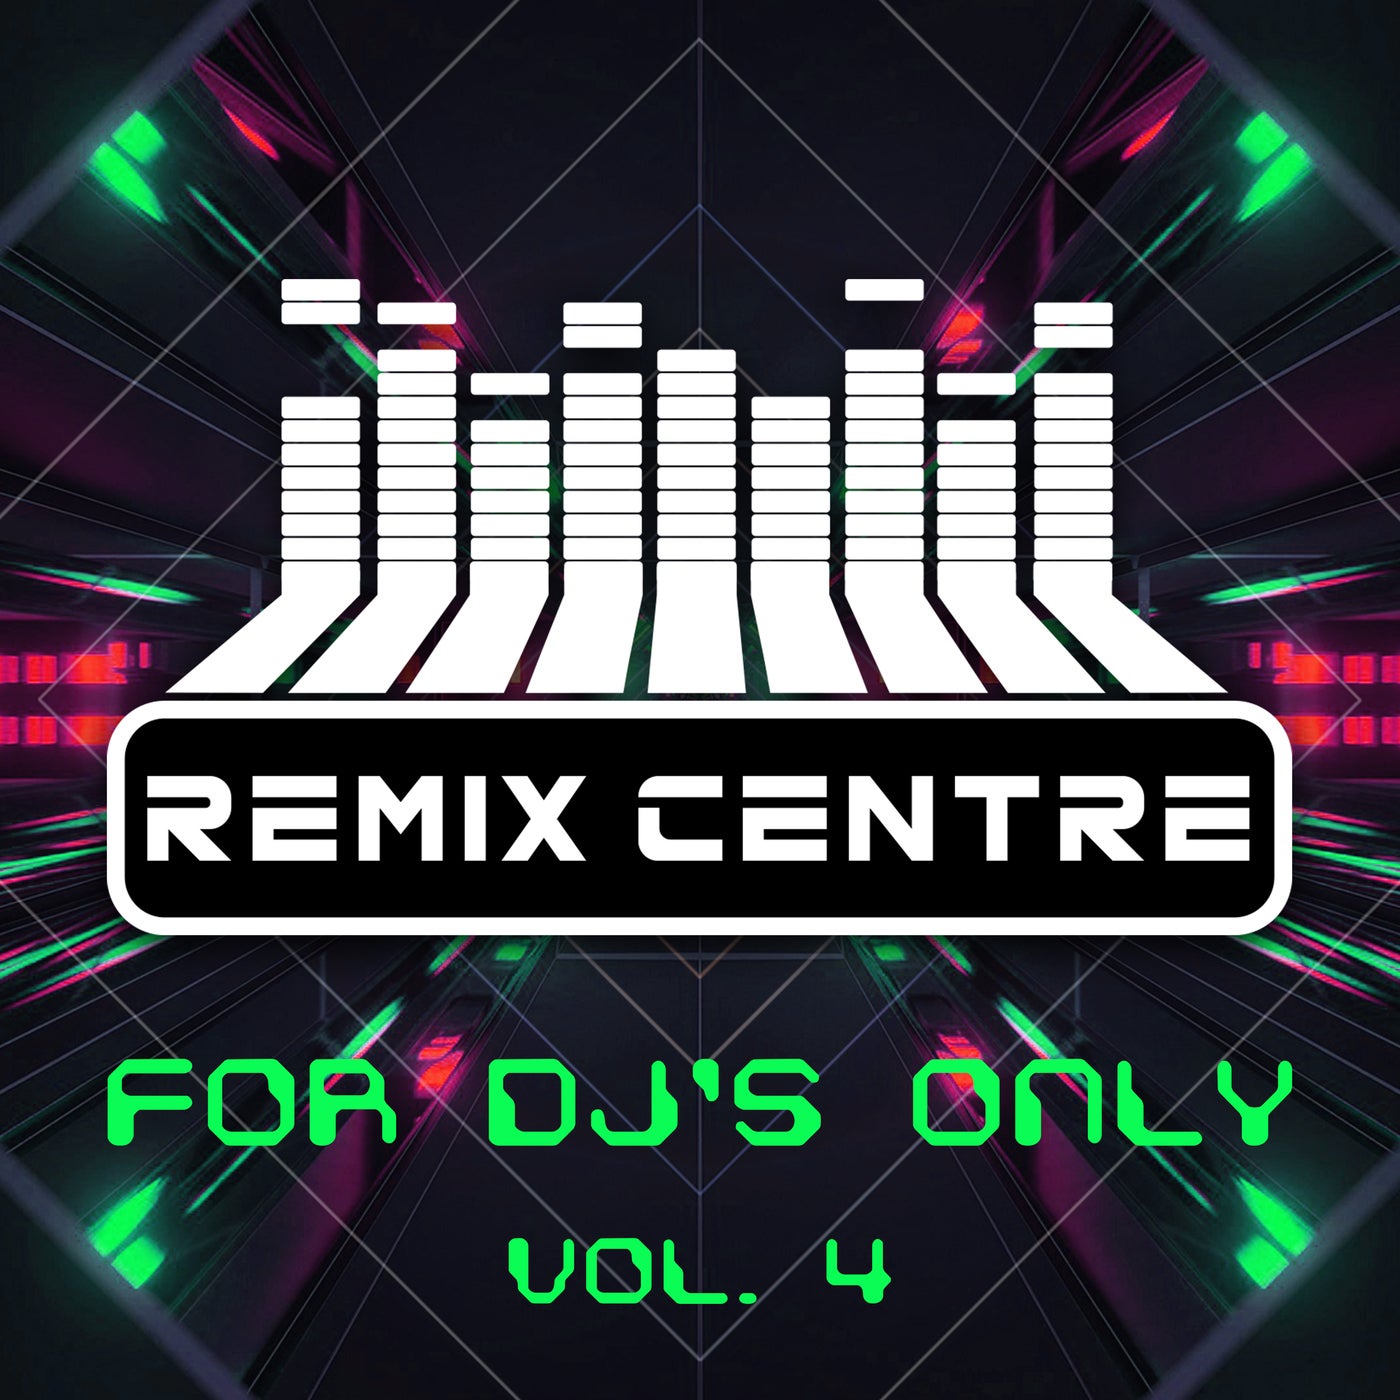 Remix Centre - For DJs Only, Vol. 4 (Extended Remix)